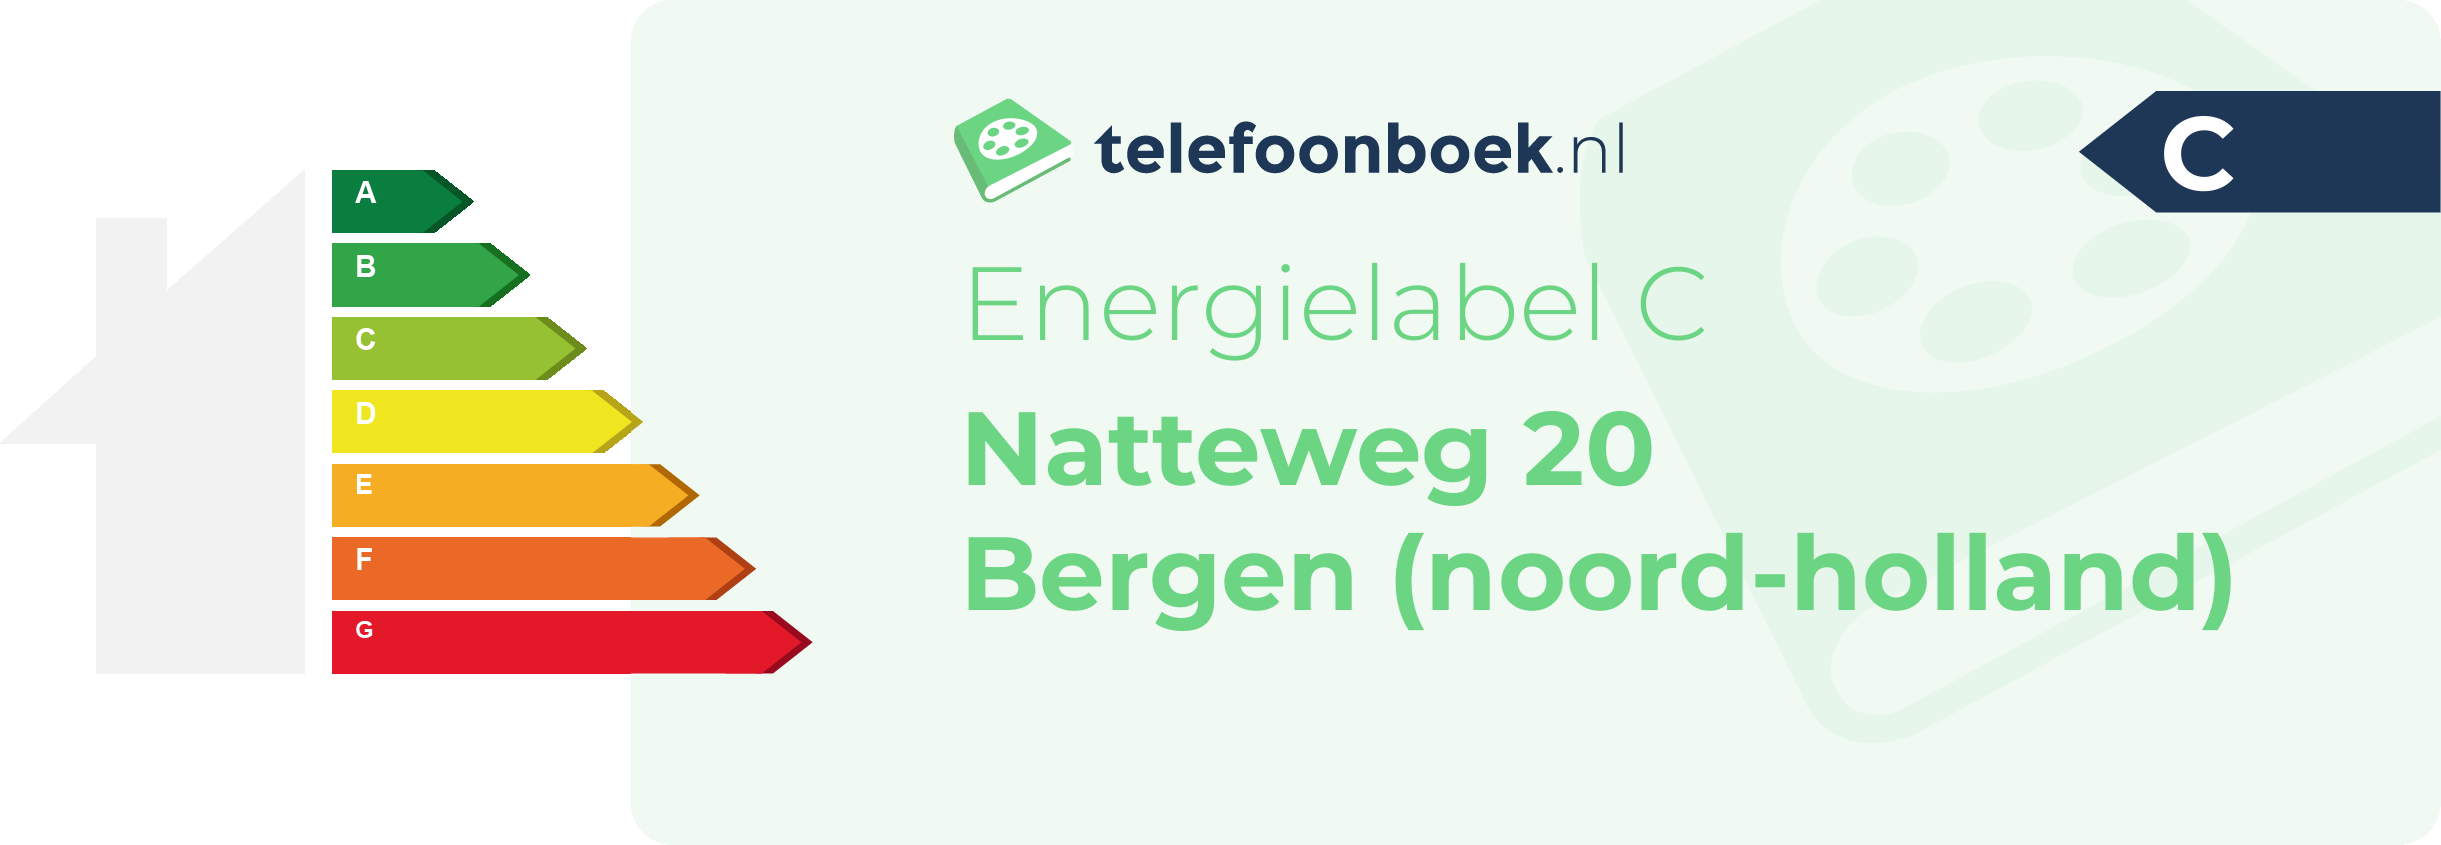 Energielabel Natteweg 20 Bergen (Noord-Holland)